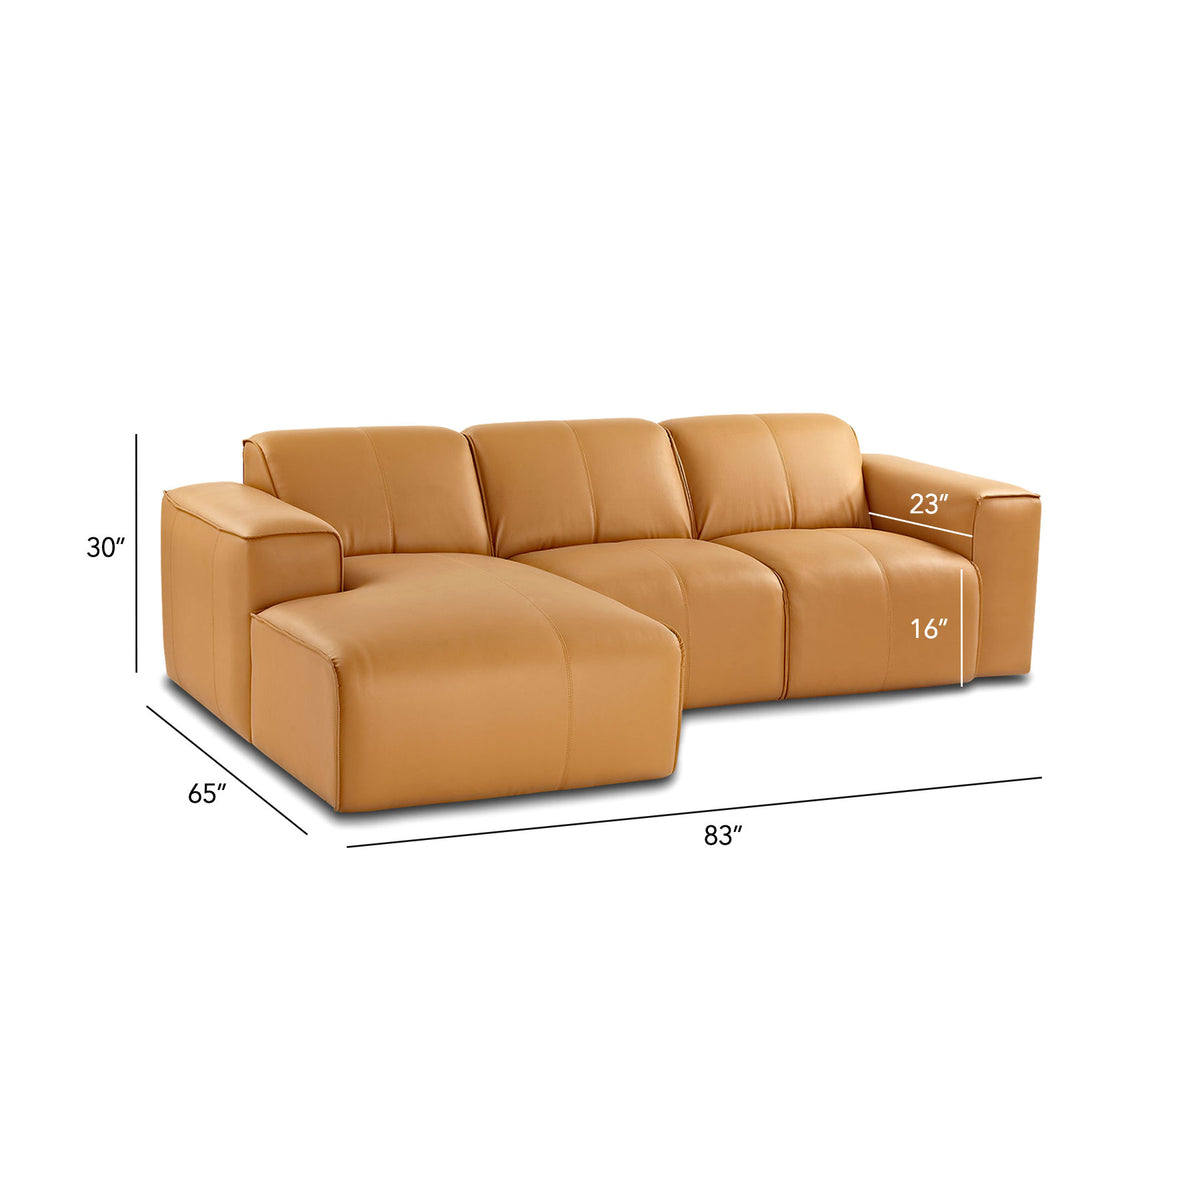 Augusta Lounger Sofa